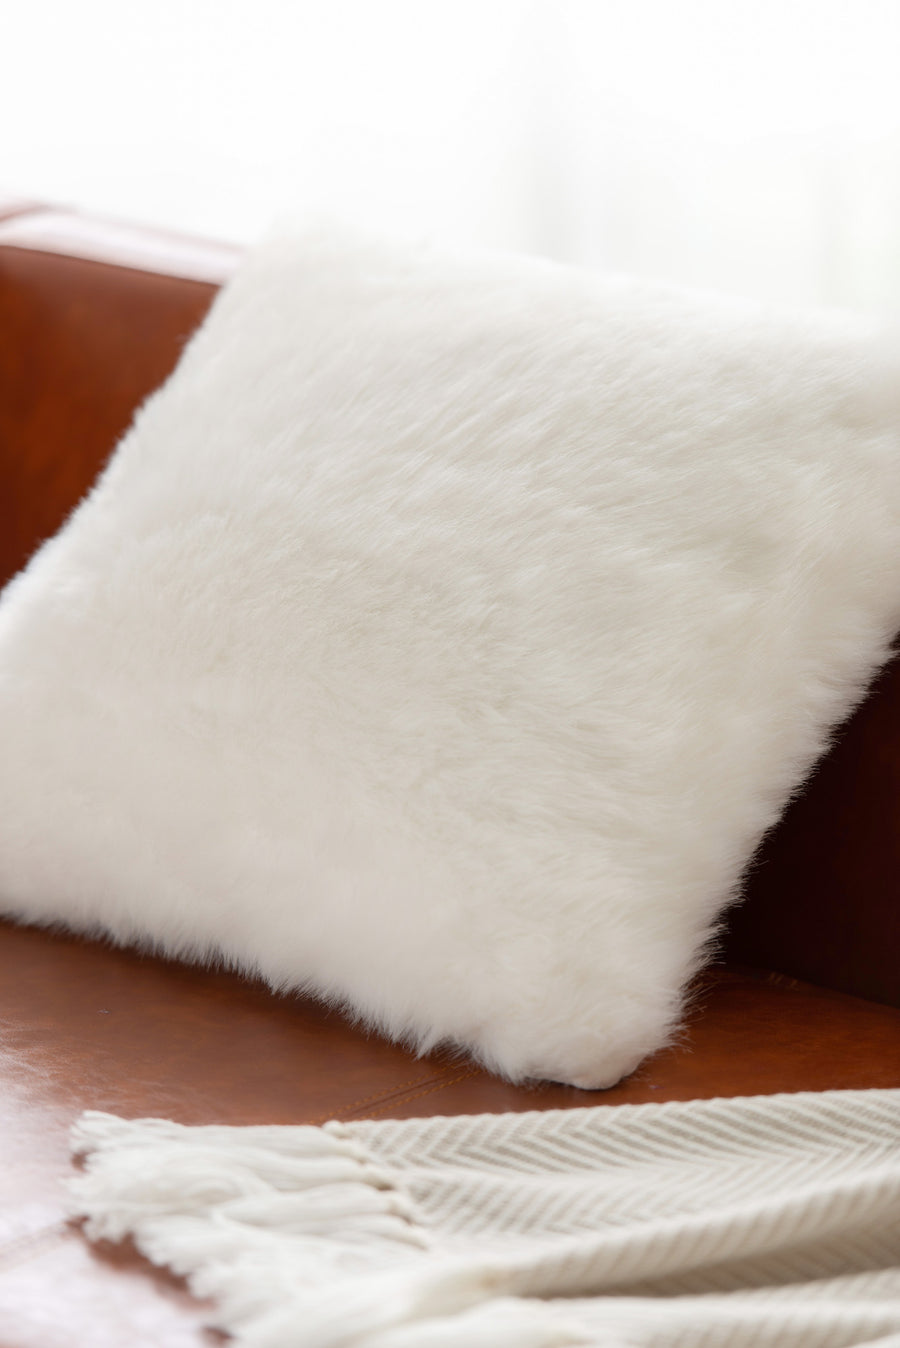 Winter Pillow Cover, Faux Fur, White, 18